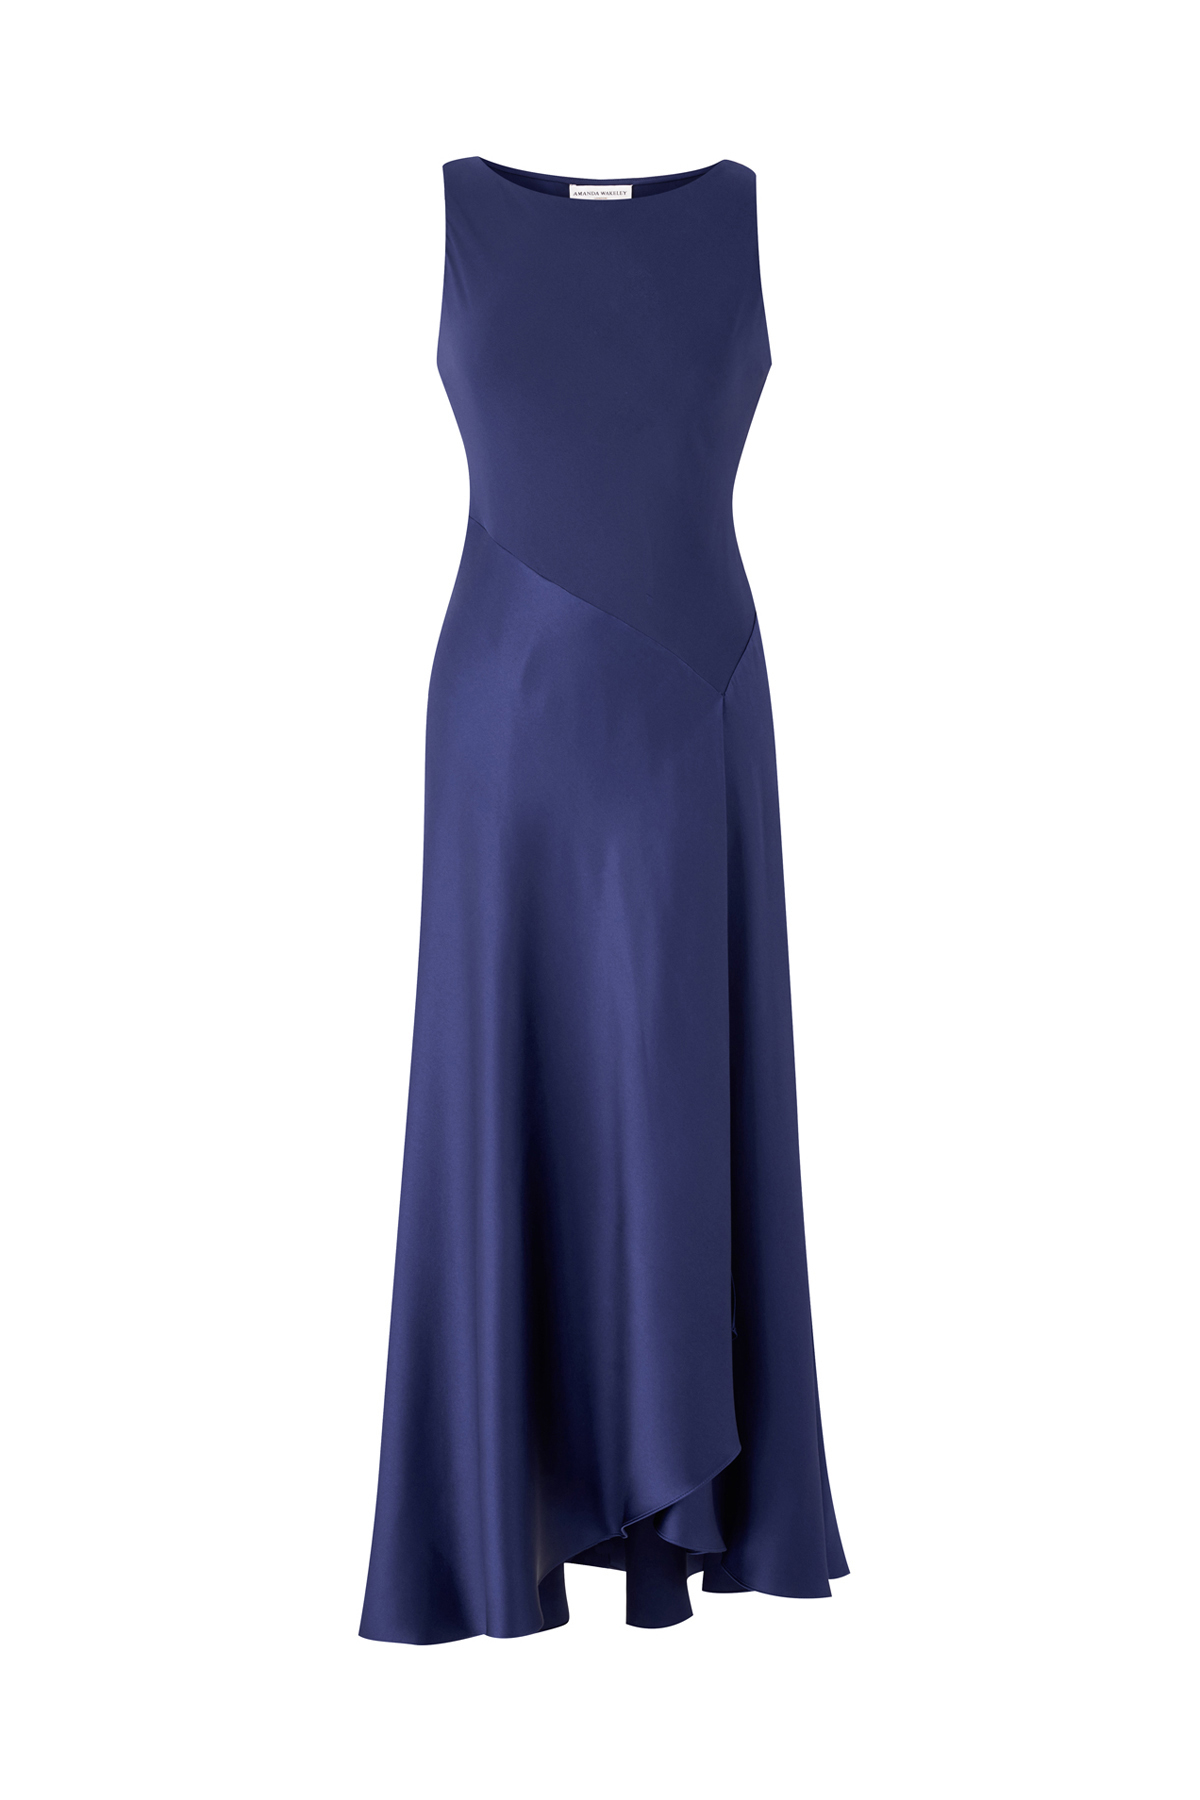 Amanda Wakeley Asayva Mulberry Dress in Blue (mulberry) | Lyst